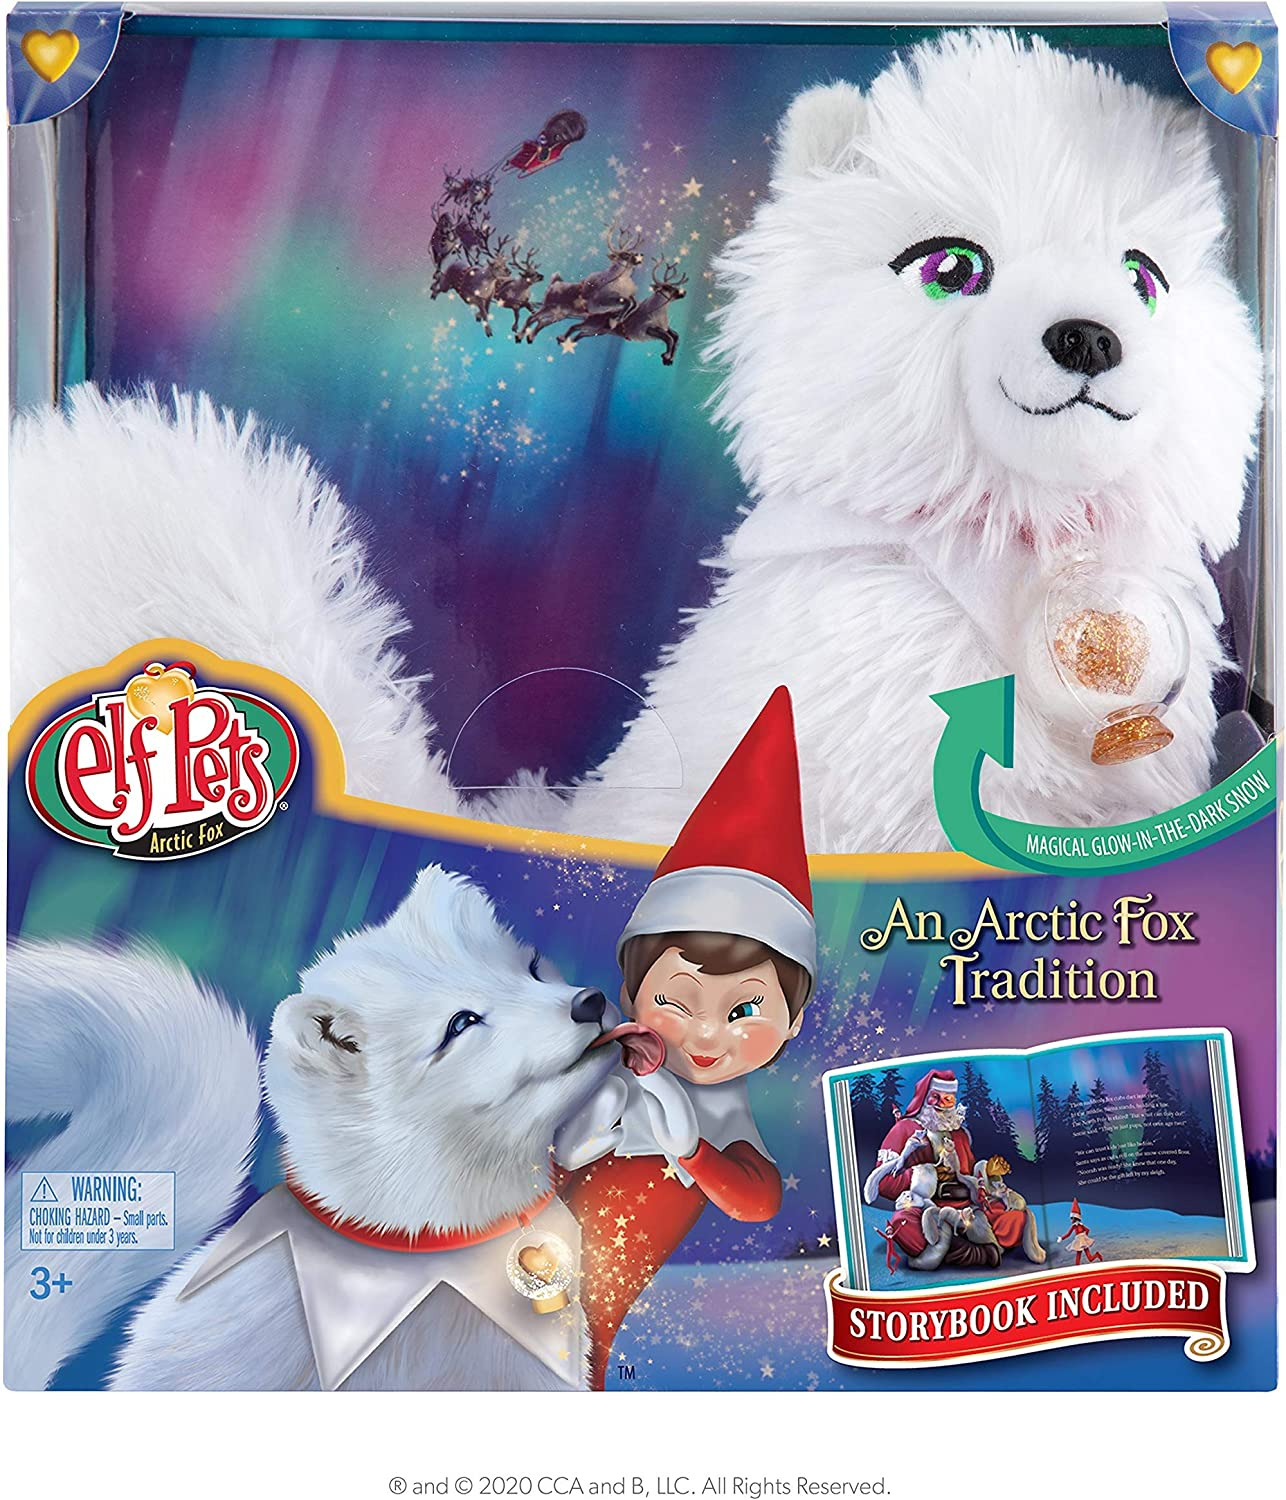 Elf Pets: an Arctic Fox Tradition